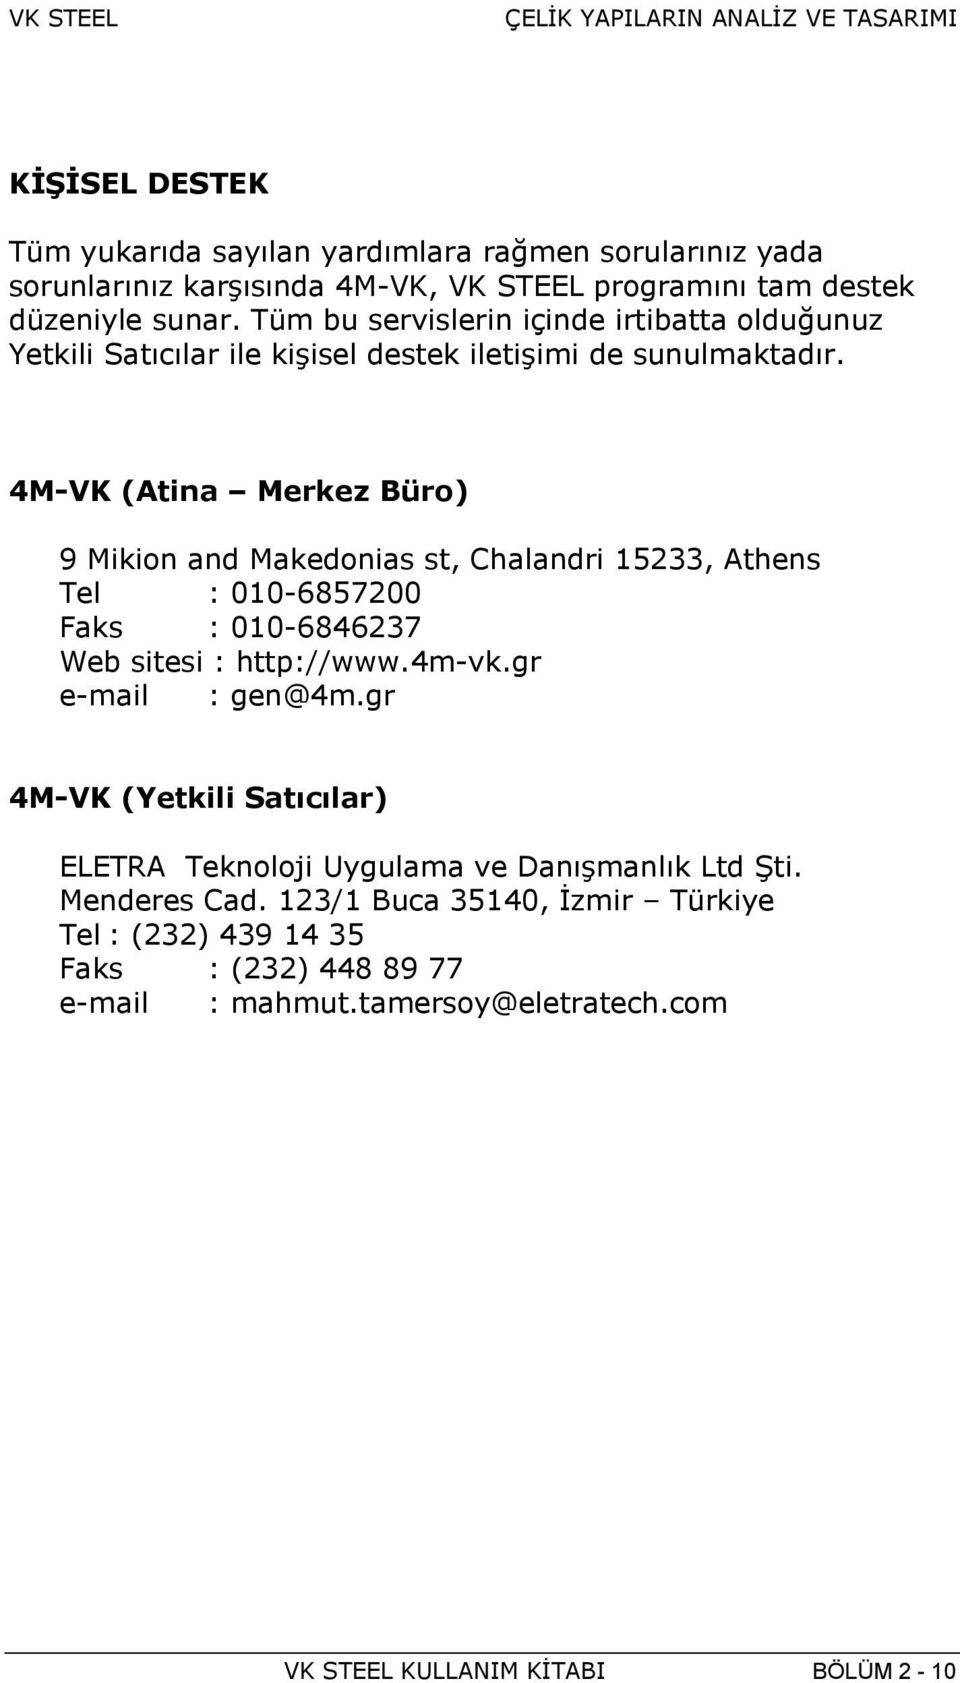 4M-VK (Atina Merkez Büro) 9 Mikion and Makedonias st, Chalandri 15233, Athens Tel : 010-6857200 Faks : 010-6846237 Web sitesi : http://www.4m-vk.gr e-mail : gen@4m.